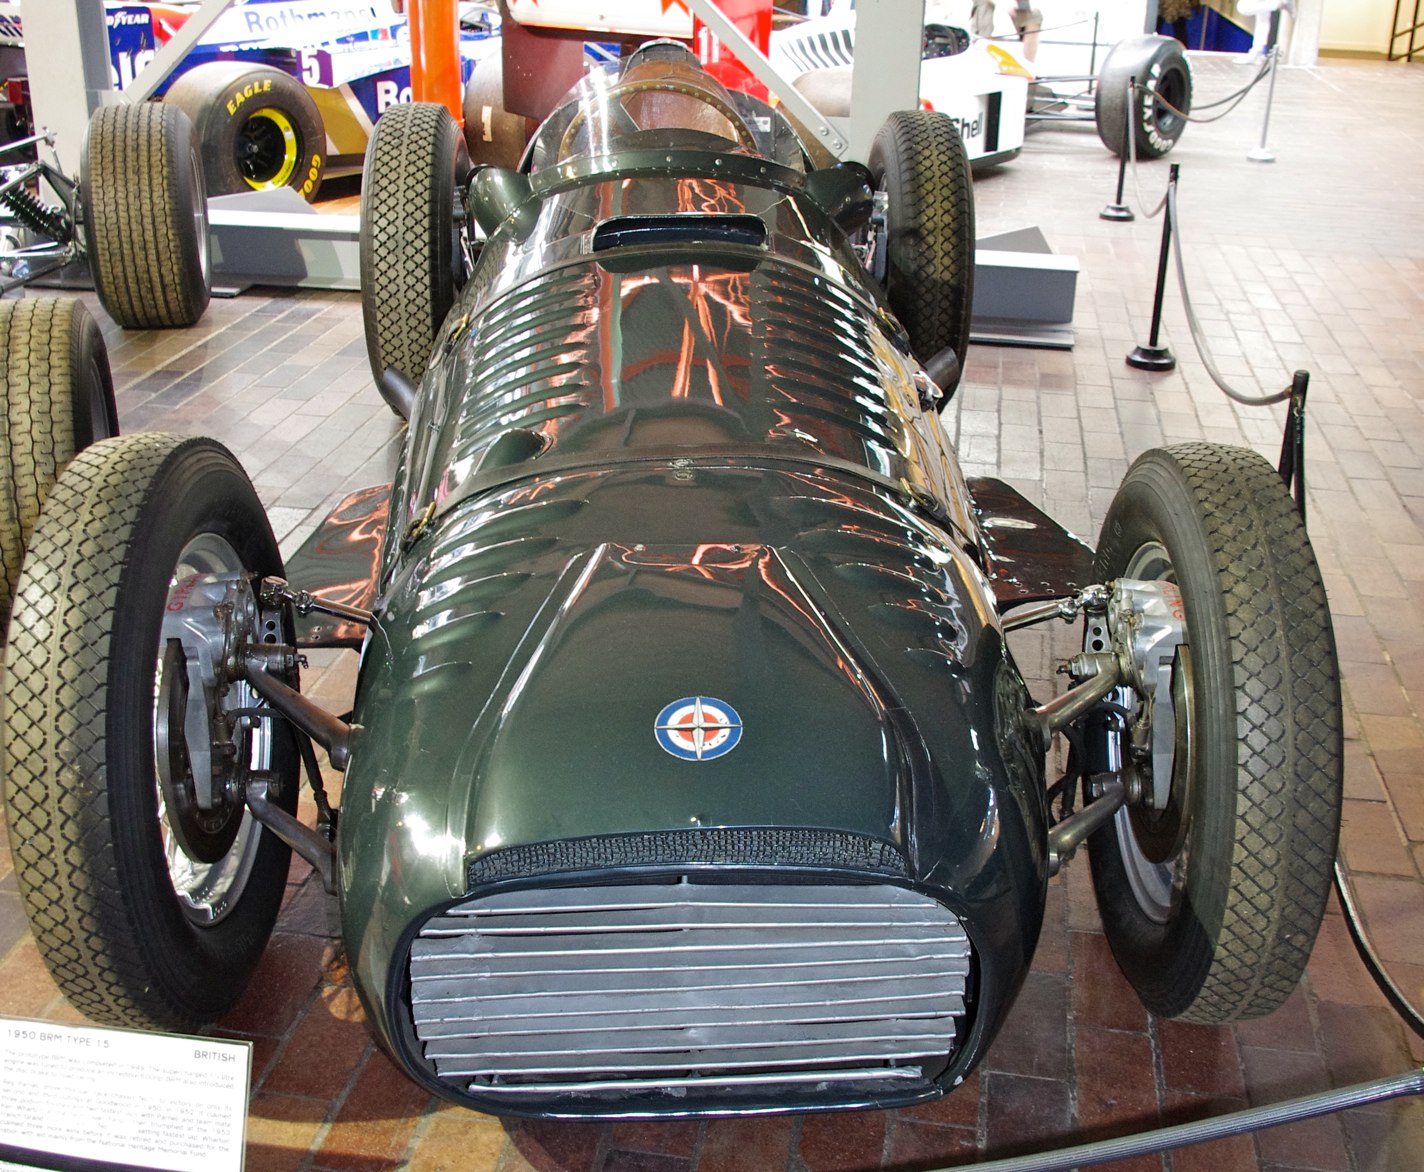 a vintage racing car being worked on on display